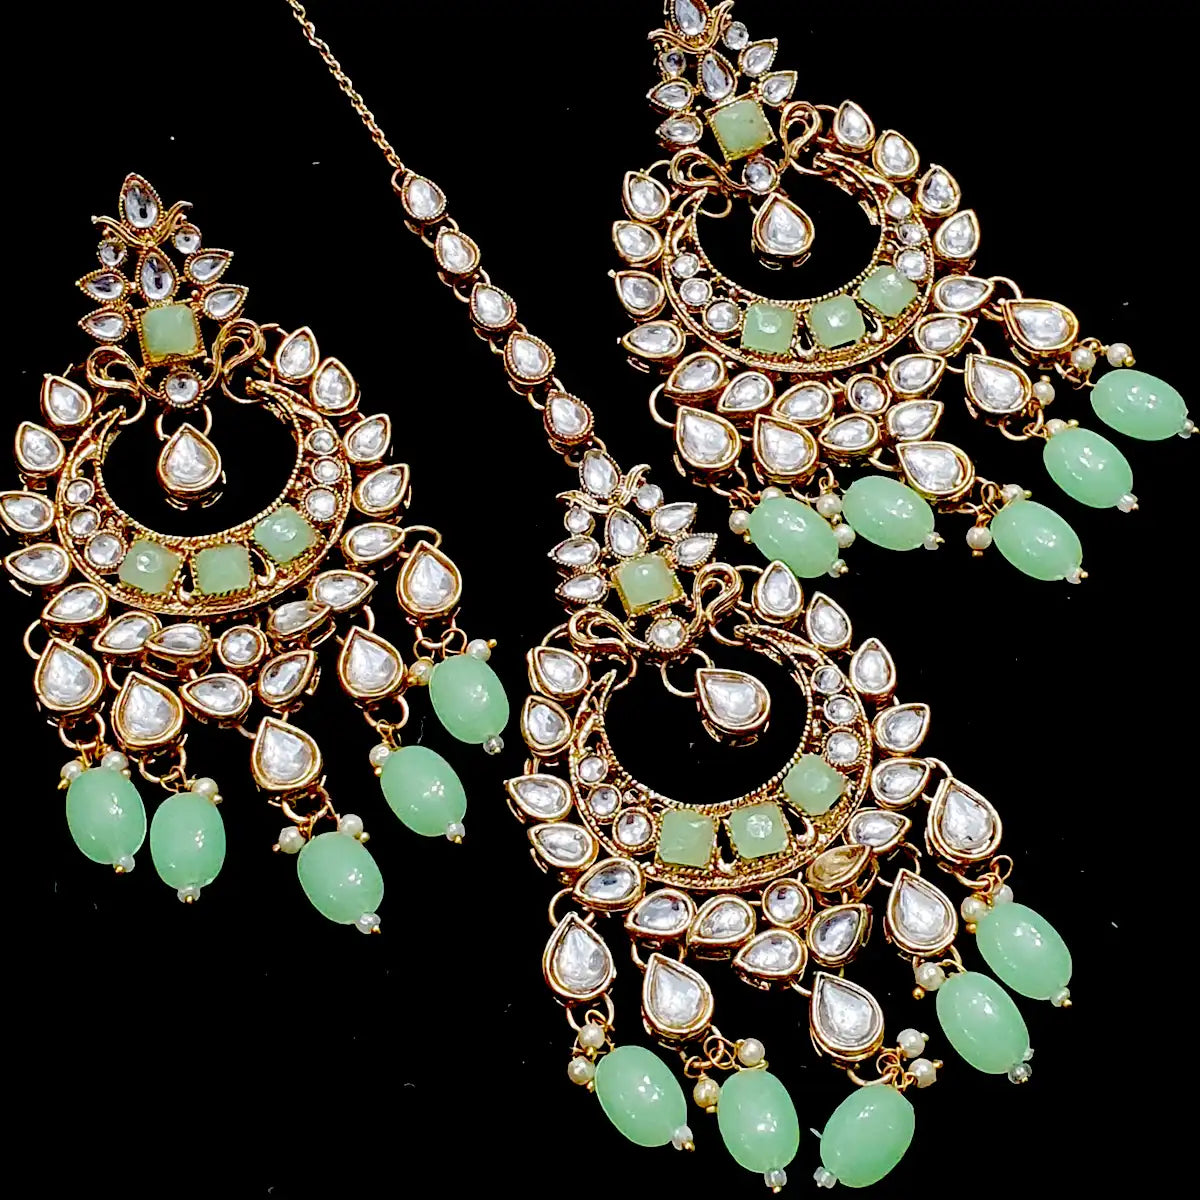 balas earrings price in Pakistan njc-005 turquoise